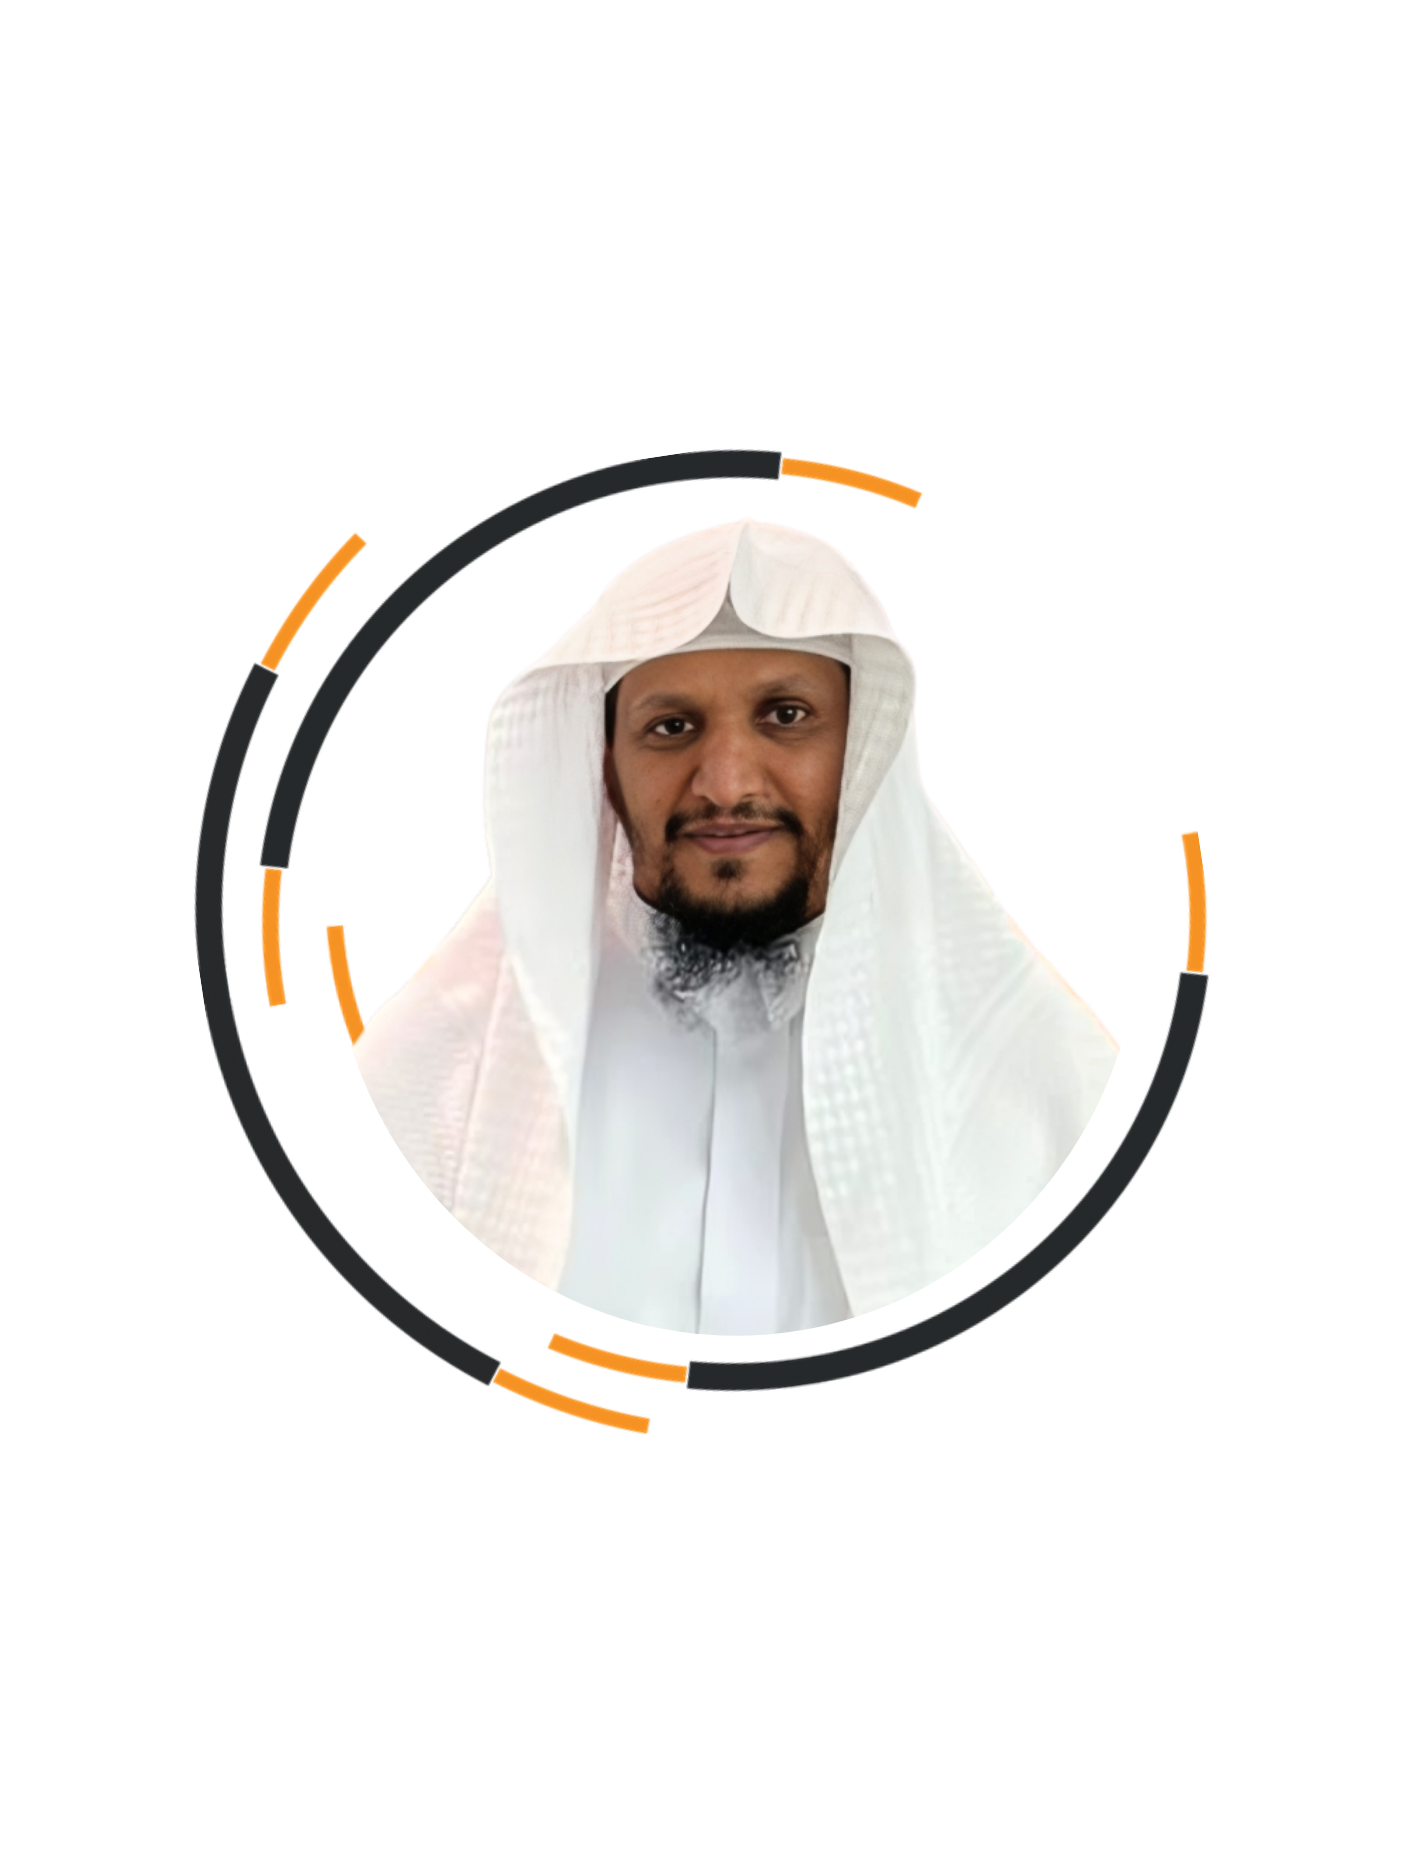 Dr. Shabib bin Hassan Al-Huqbani